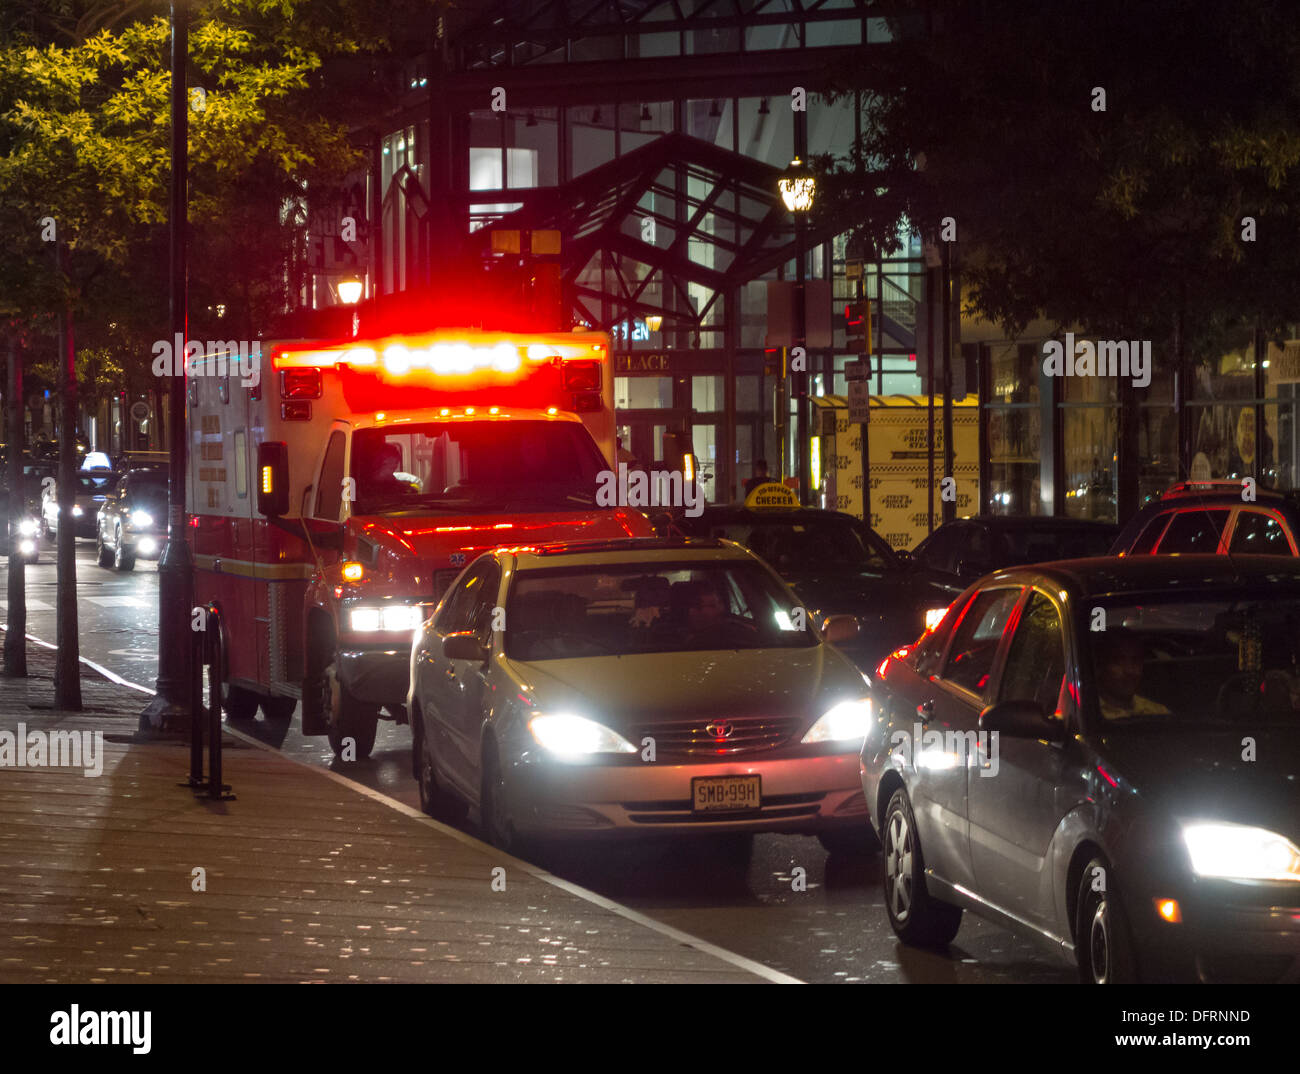 ambulance blocked by traffic in busy street, Philadelphia city center, Pennsylvania, USA Stock Photo